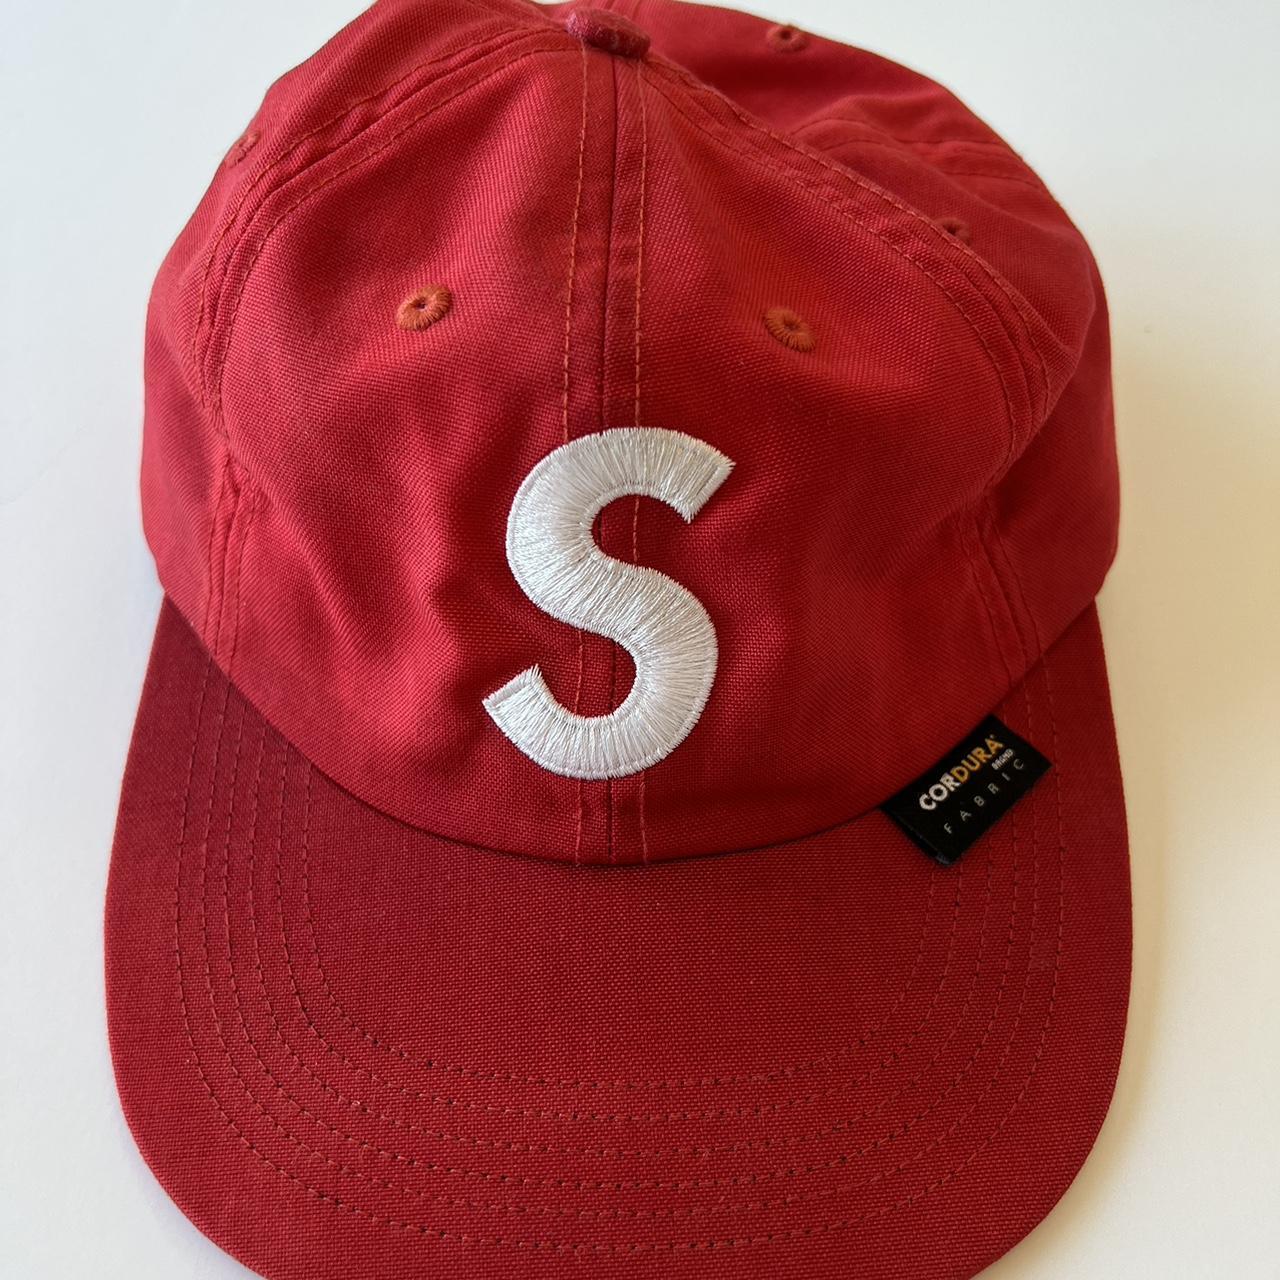 heres a Supreme Cordura hat “S” logo 6 panel hat....